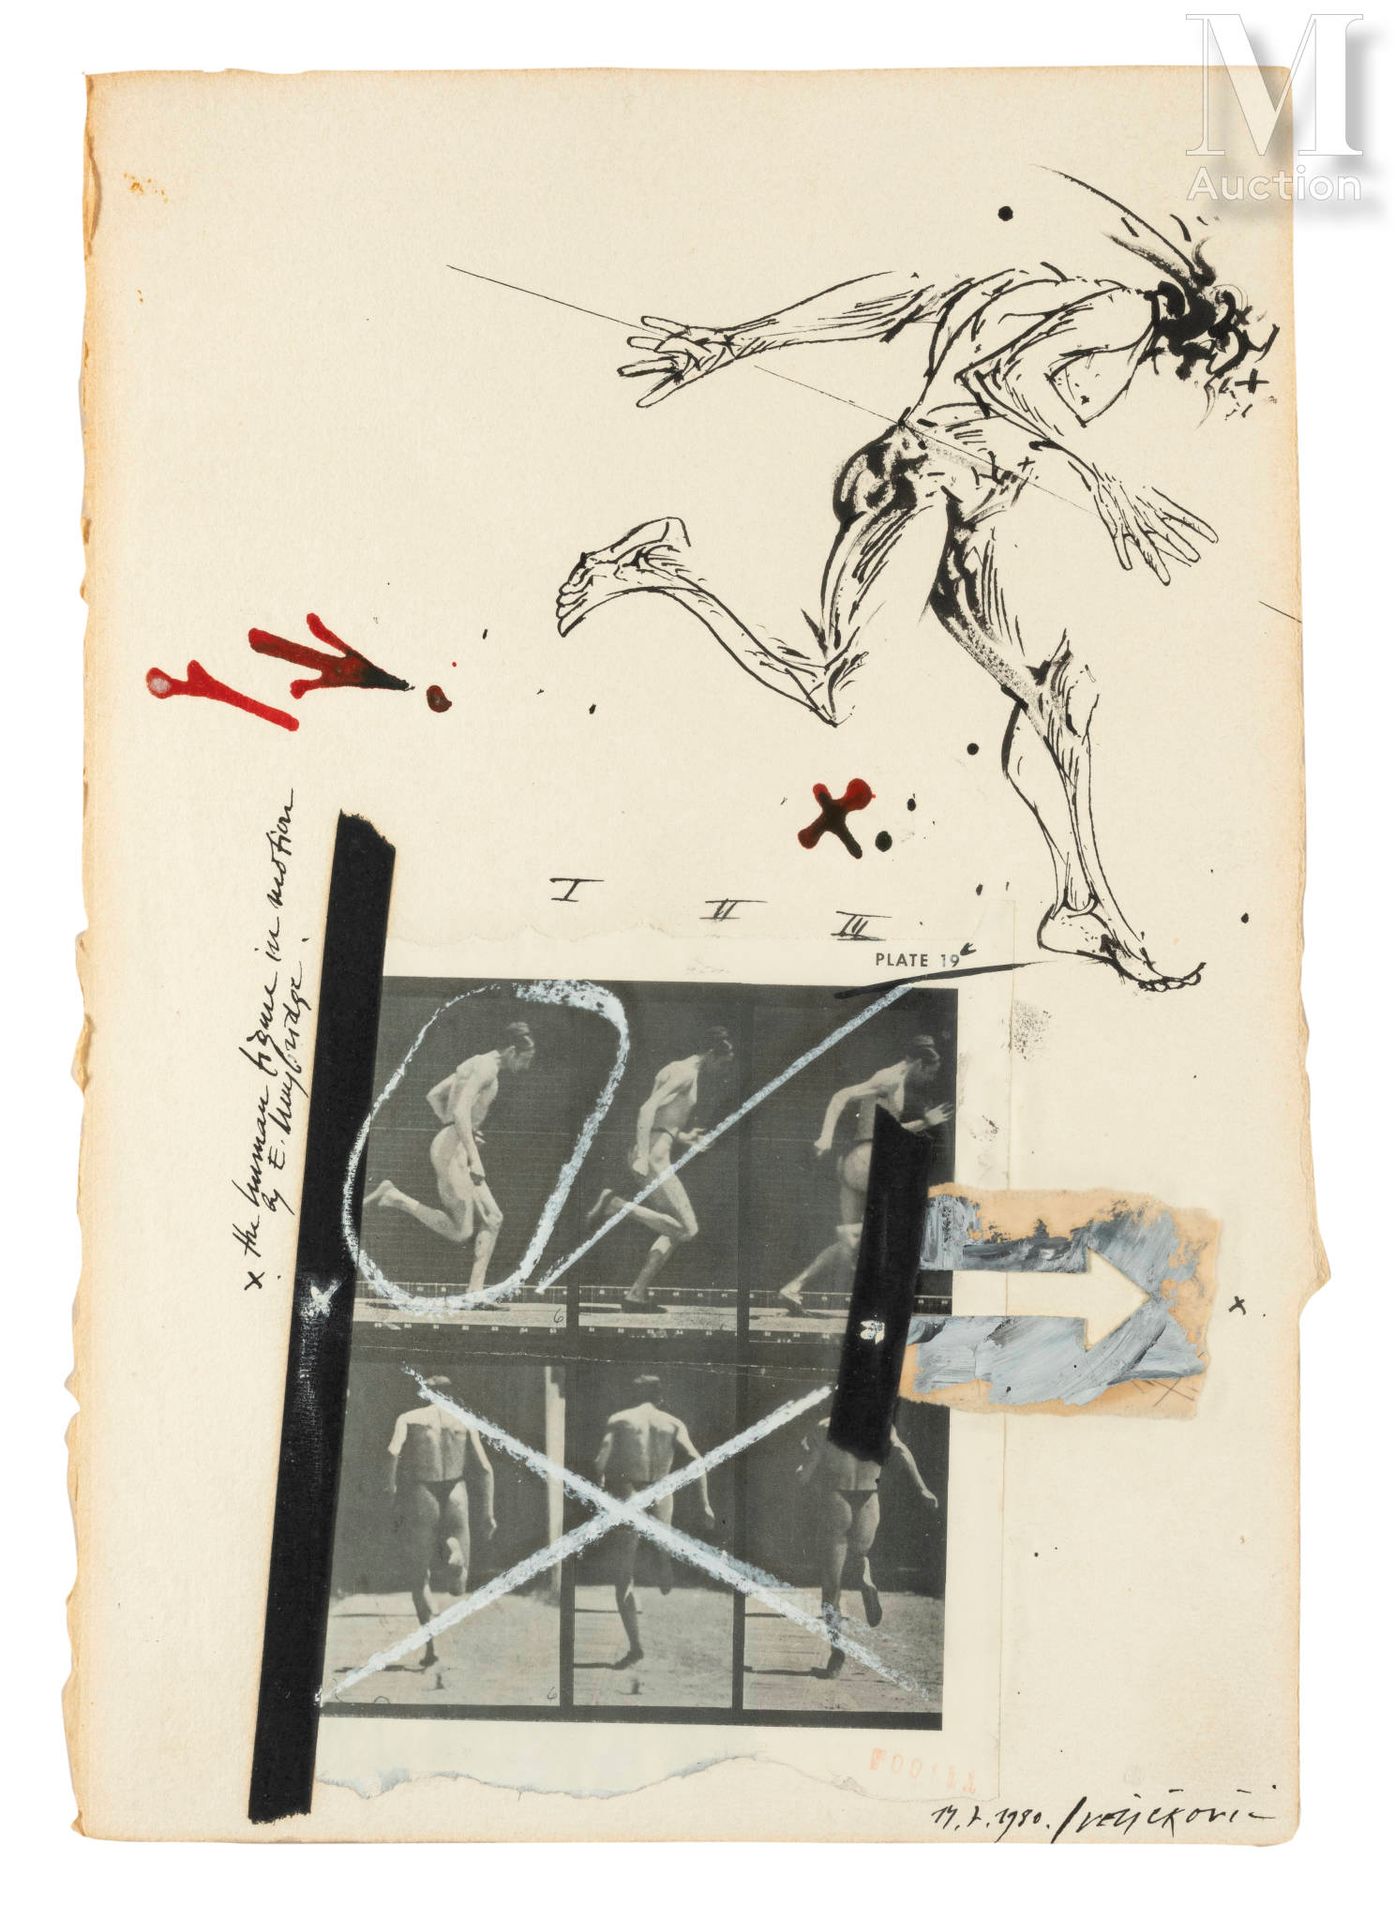 Vladimir VELICKOVIC (1935-2019) 运动中的人形，1980年

纸上水墨、丙烯酸和拼贴画，右下方有签名和日期
38,5 x 26 c&hellip;